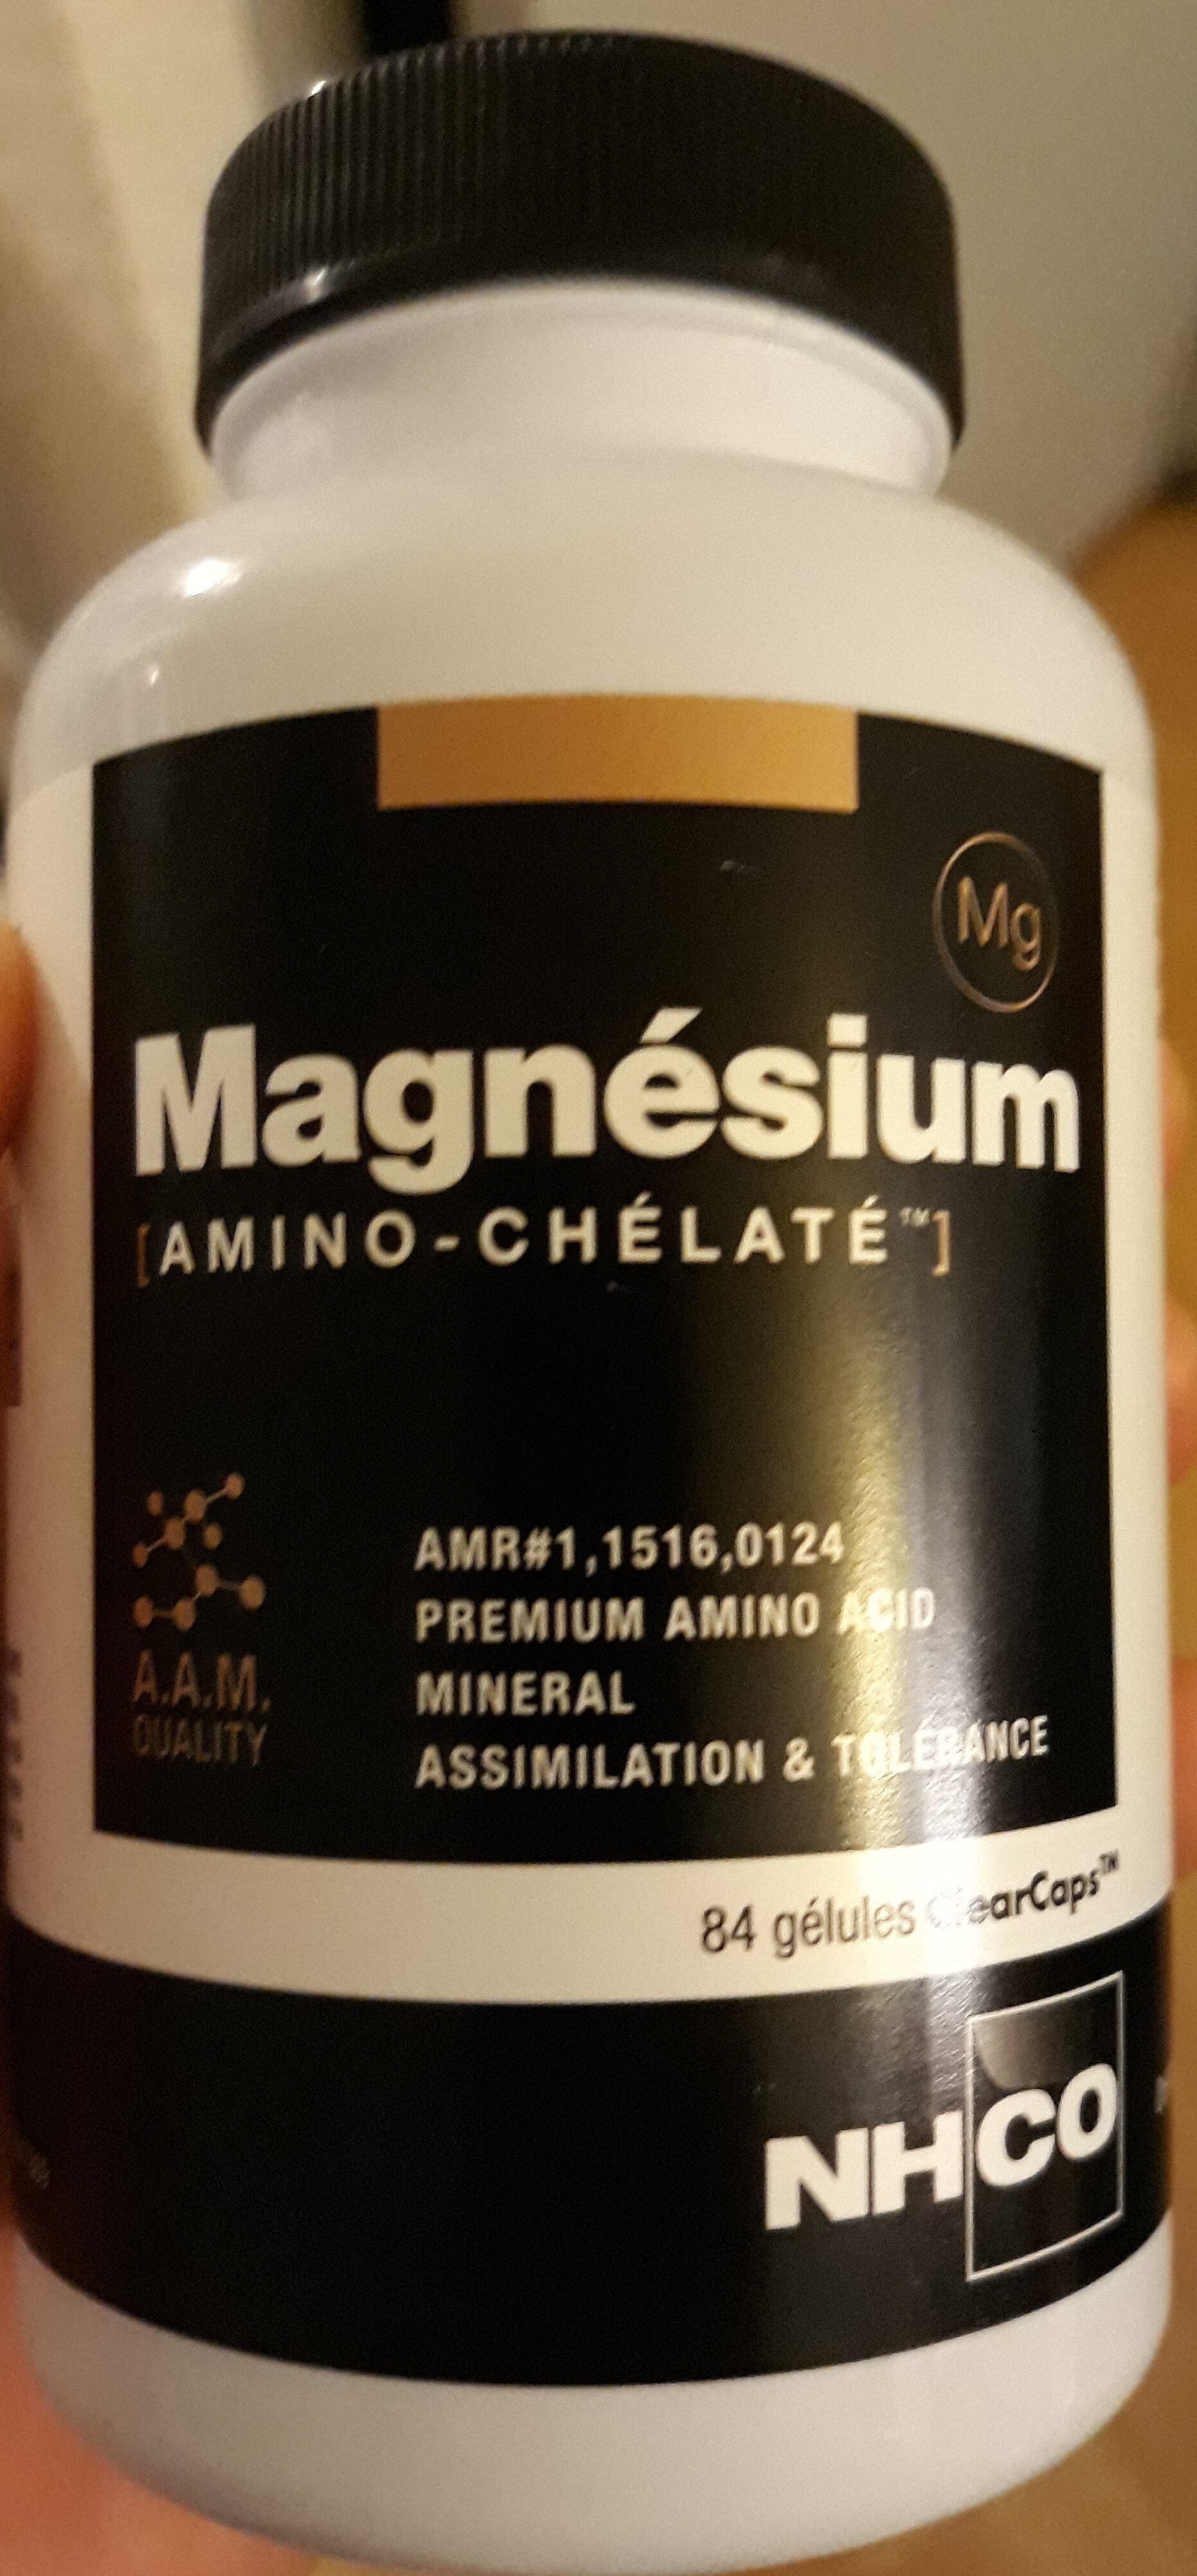 Nhco Nutrition Magnesium Amino Chelate 84 Gelules - Product - fr